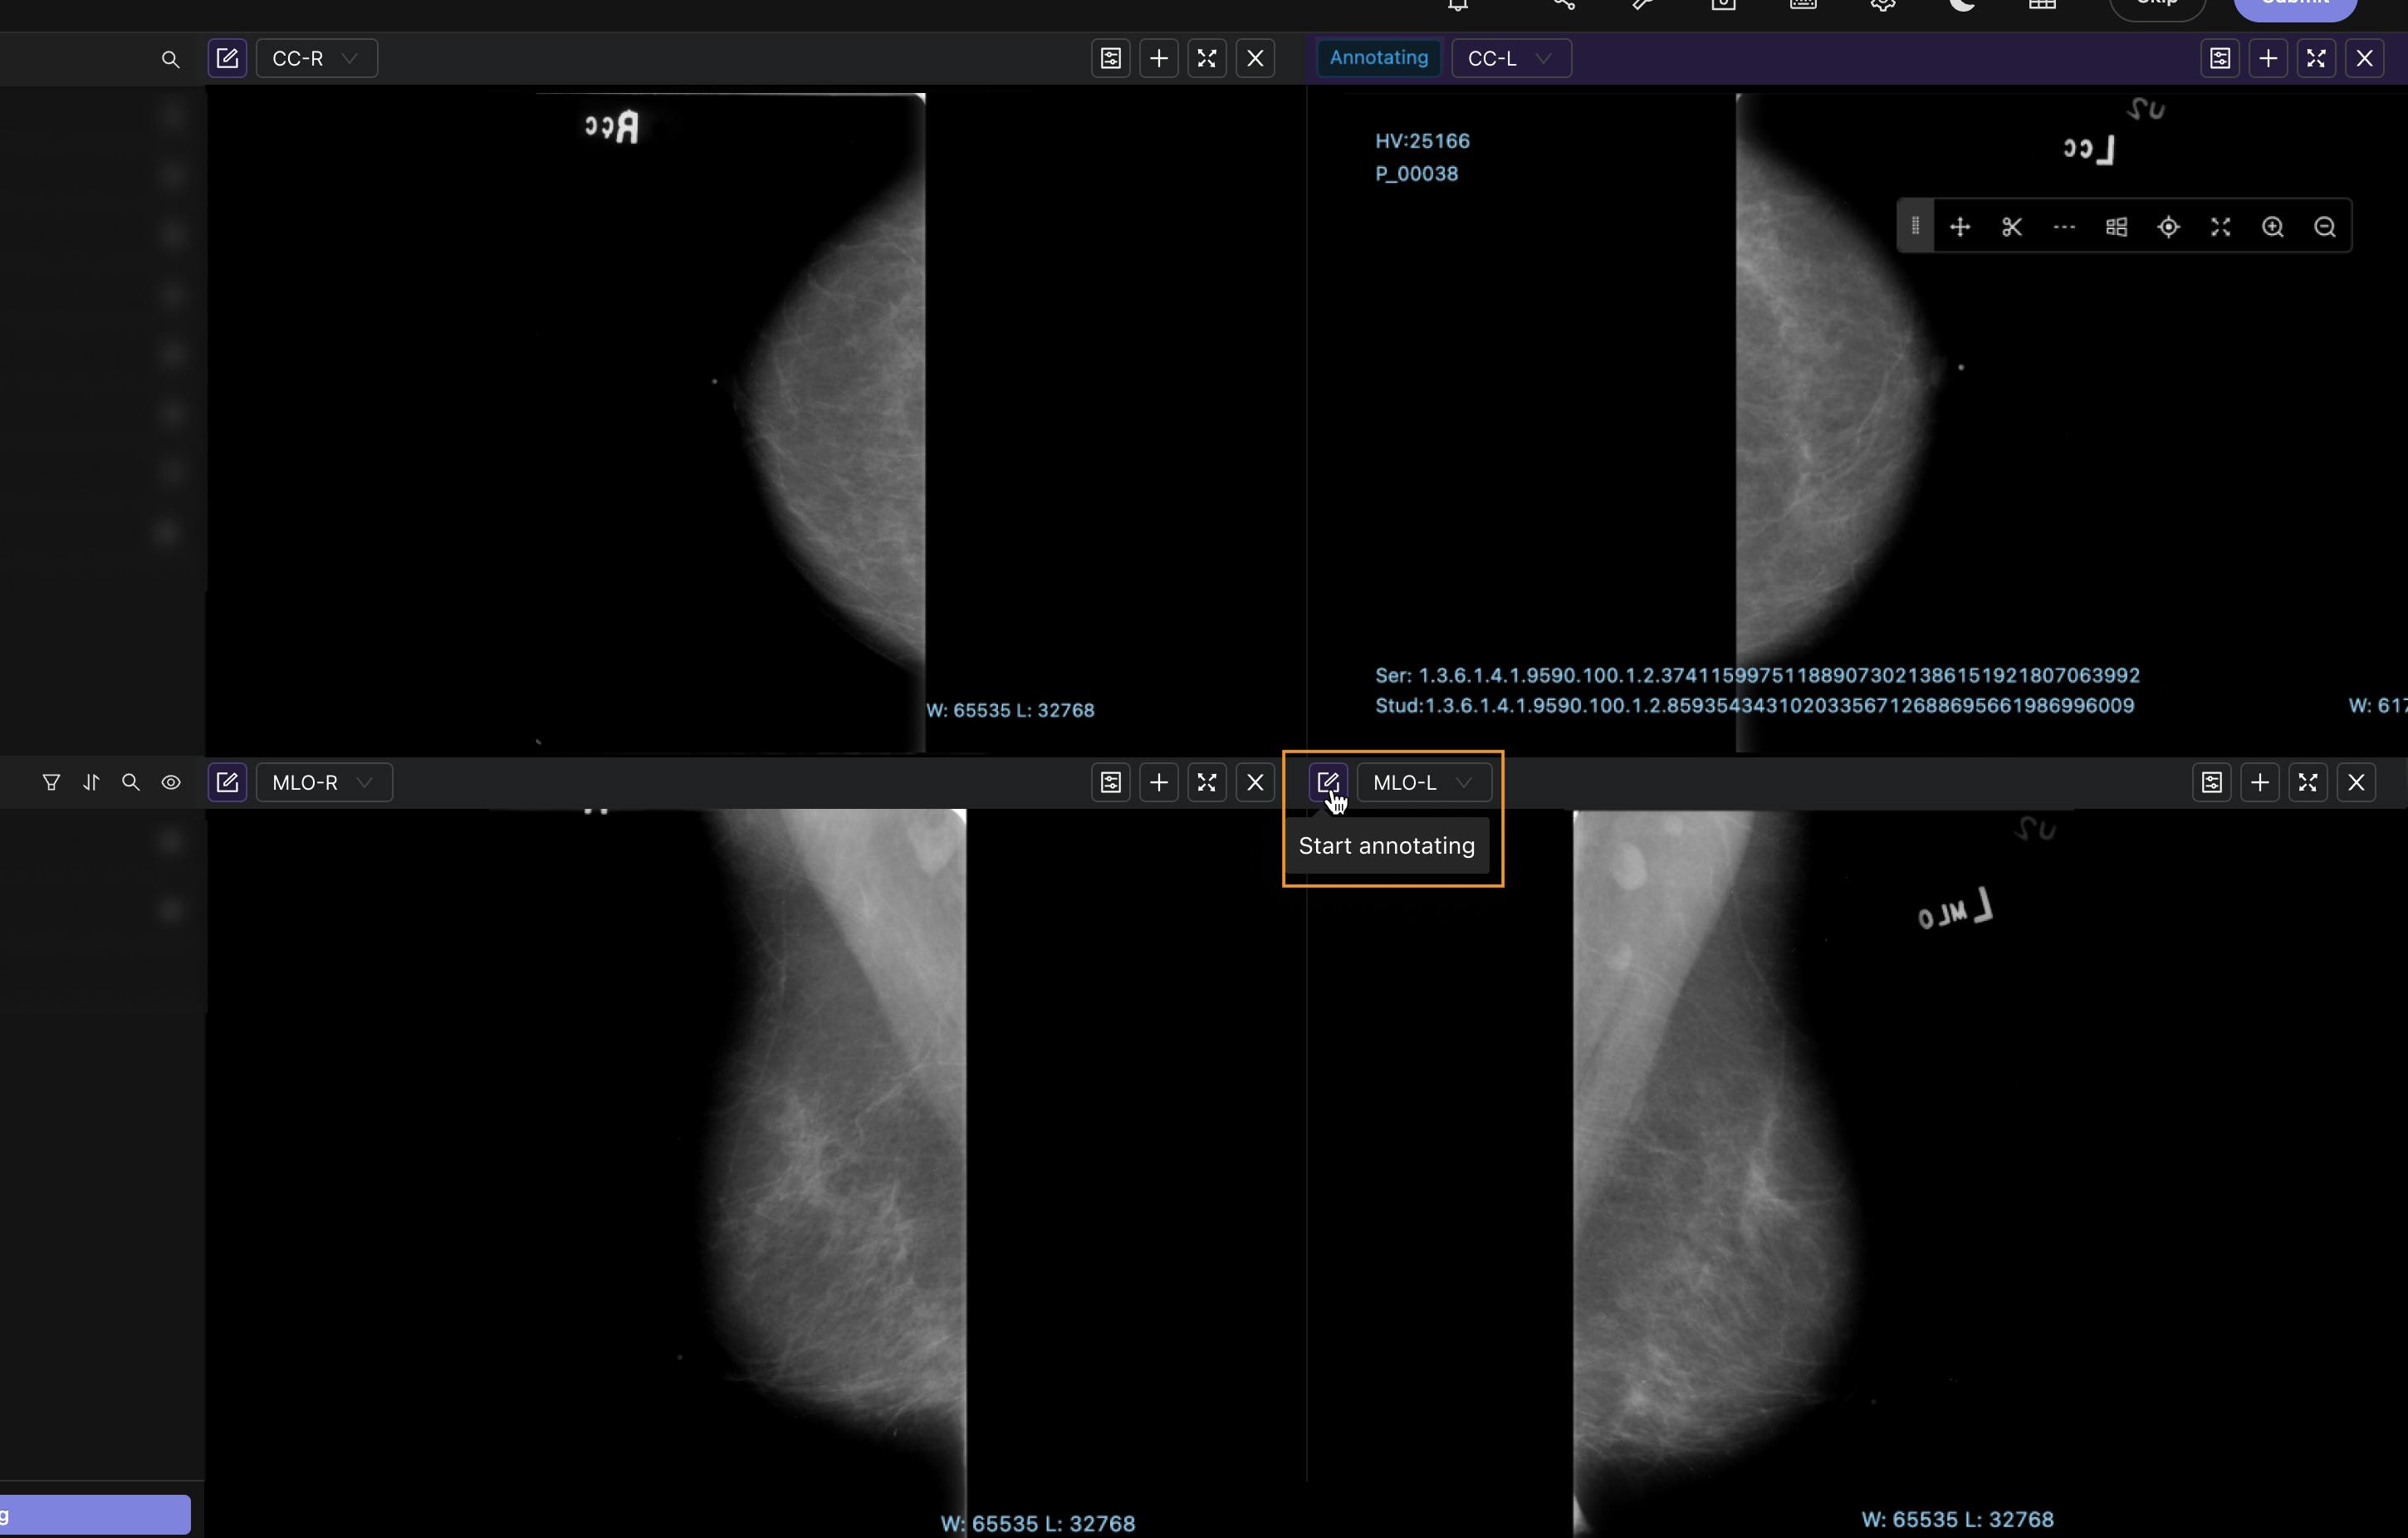 Mammogram still images in DICOM viewer